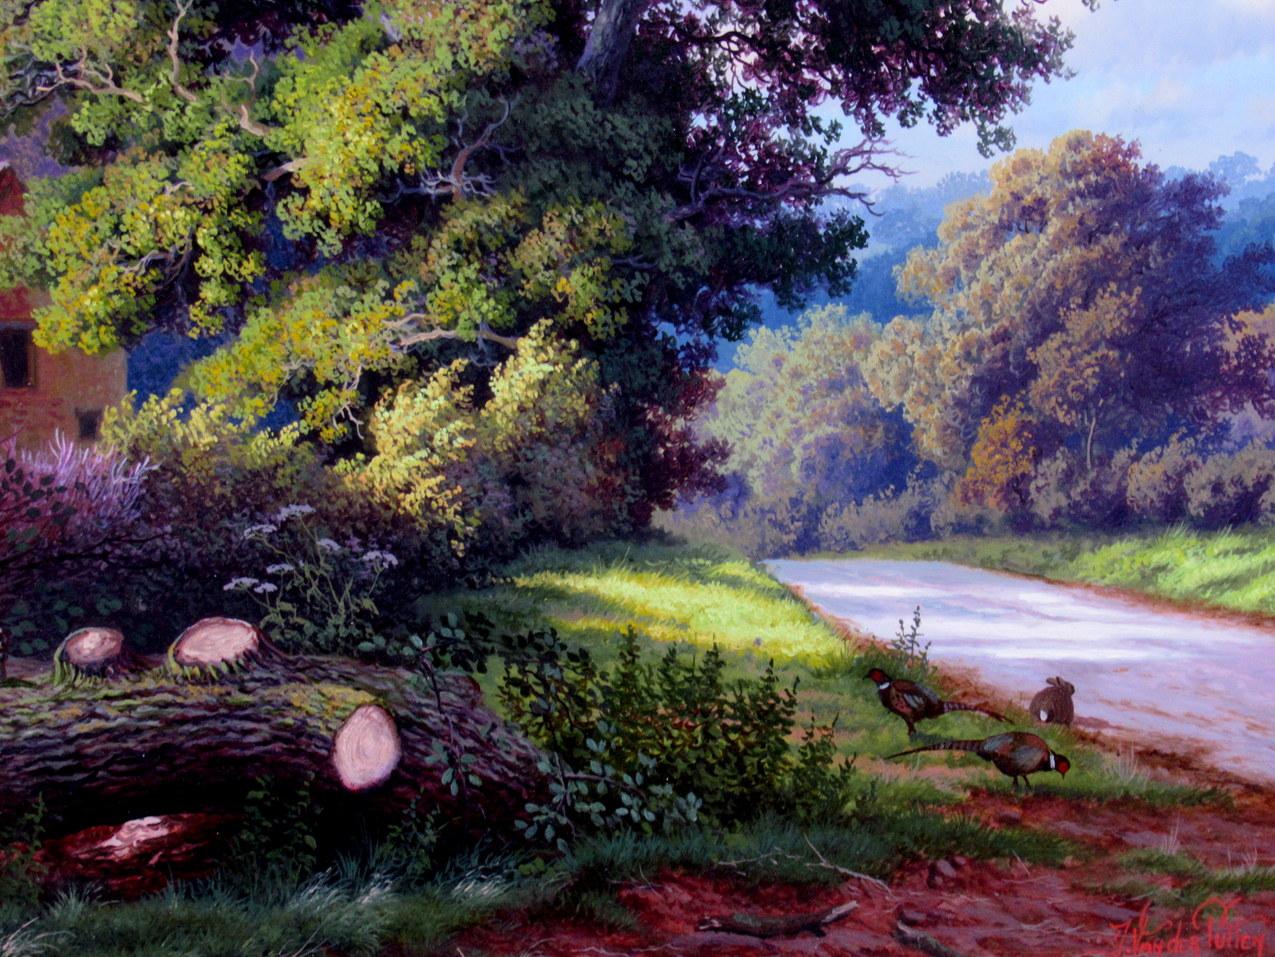 Hand-Painted Daniel Van der Putten Oil Painting English Rural Landscape Scene Farmhouse Trees